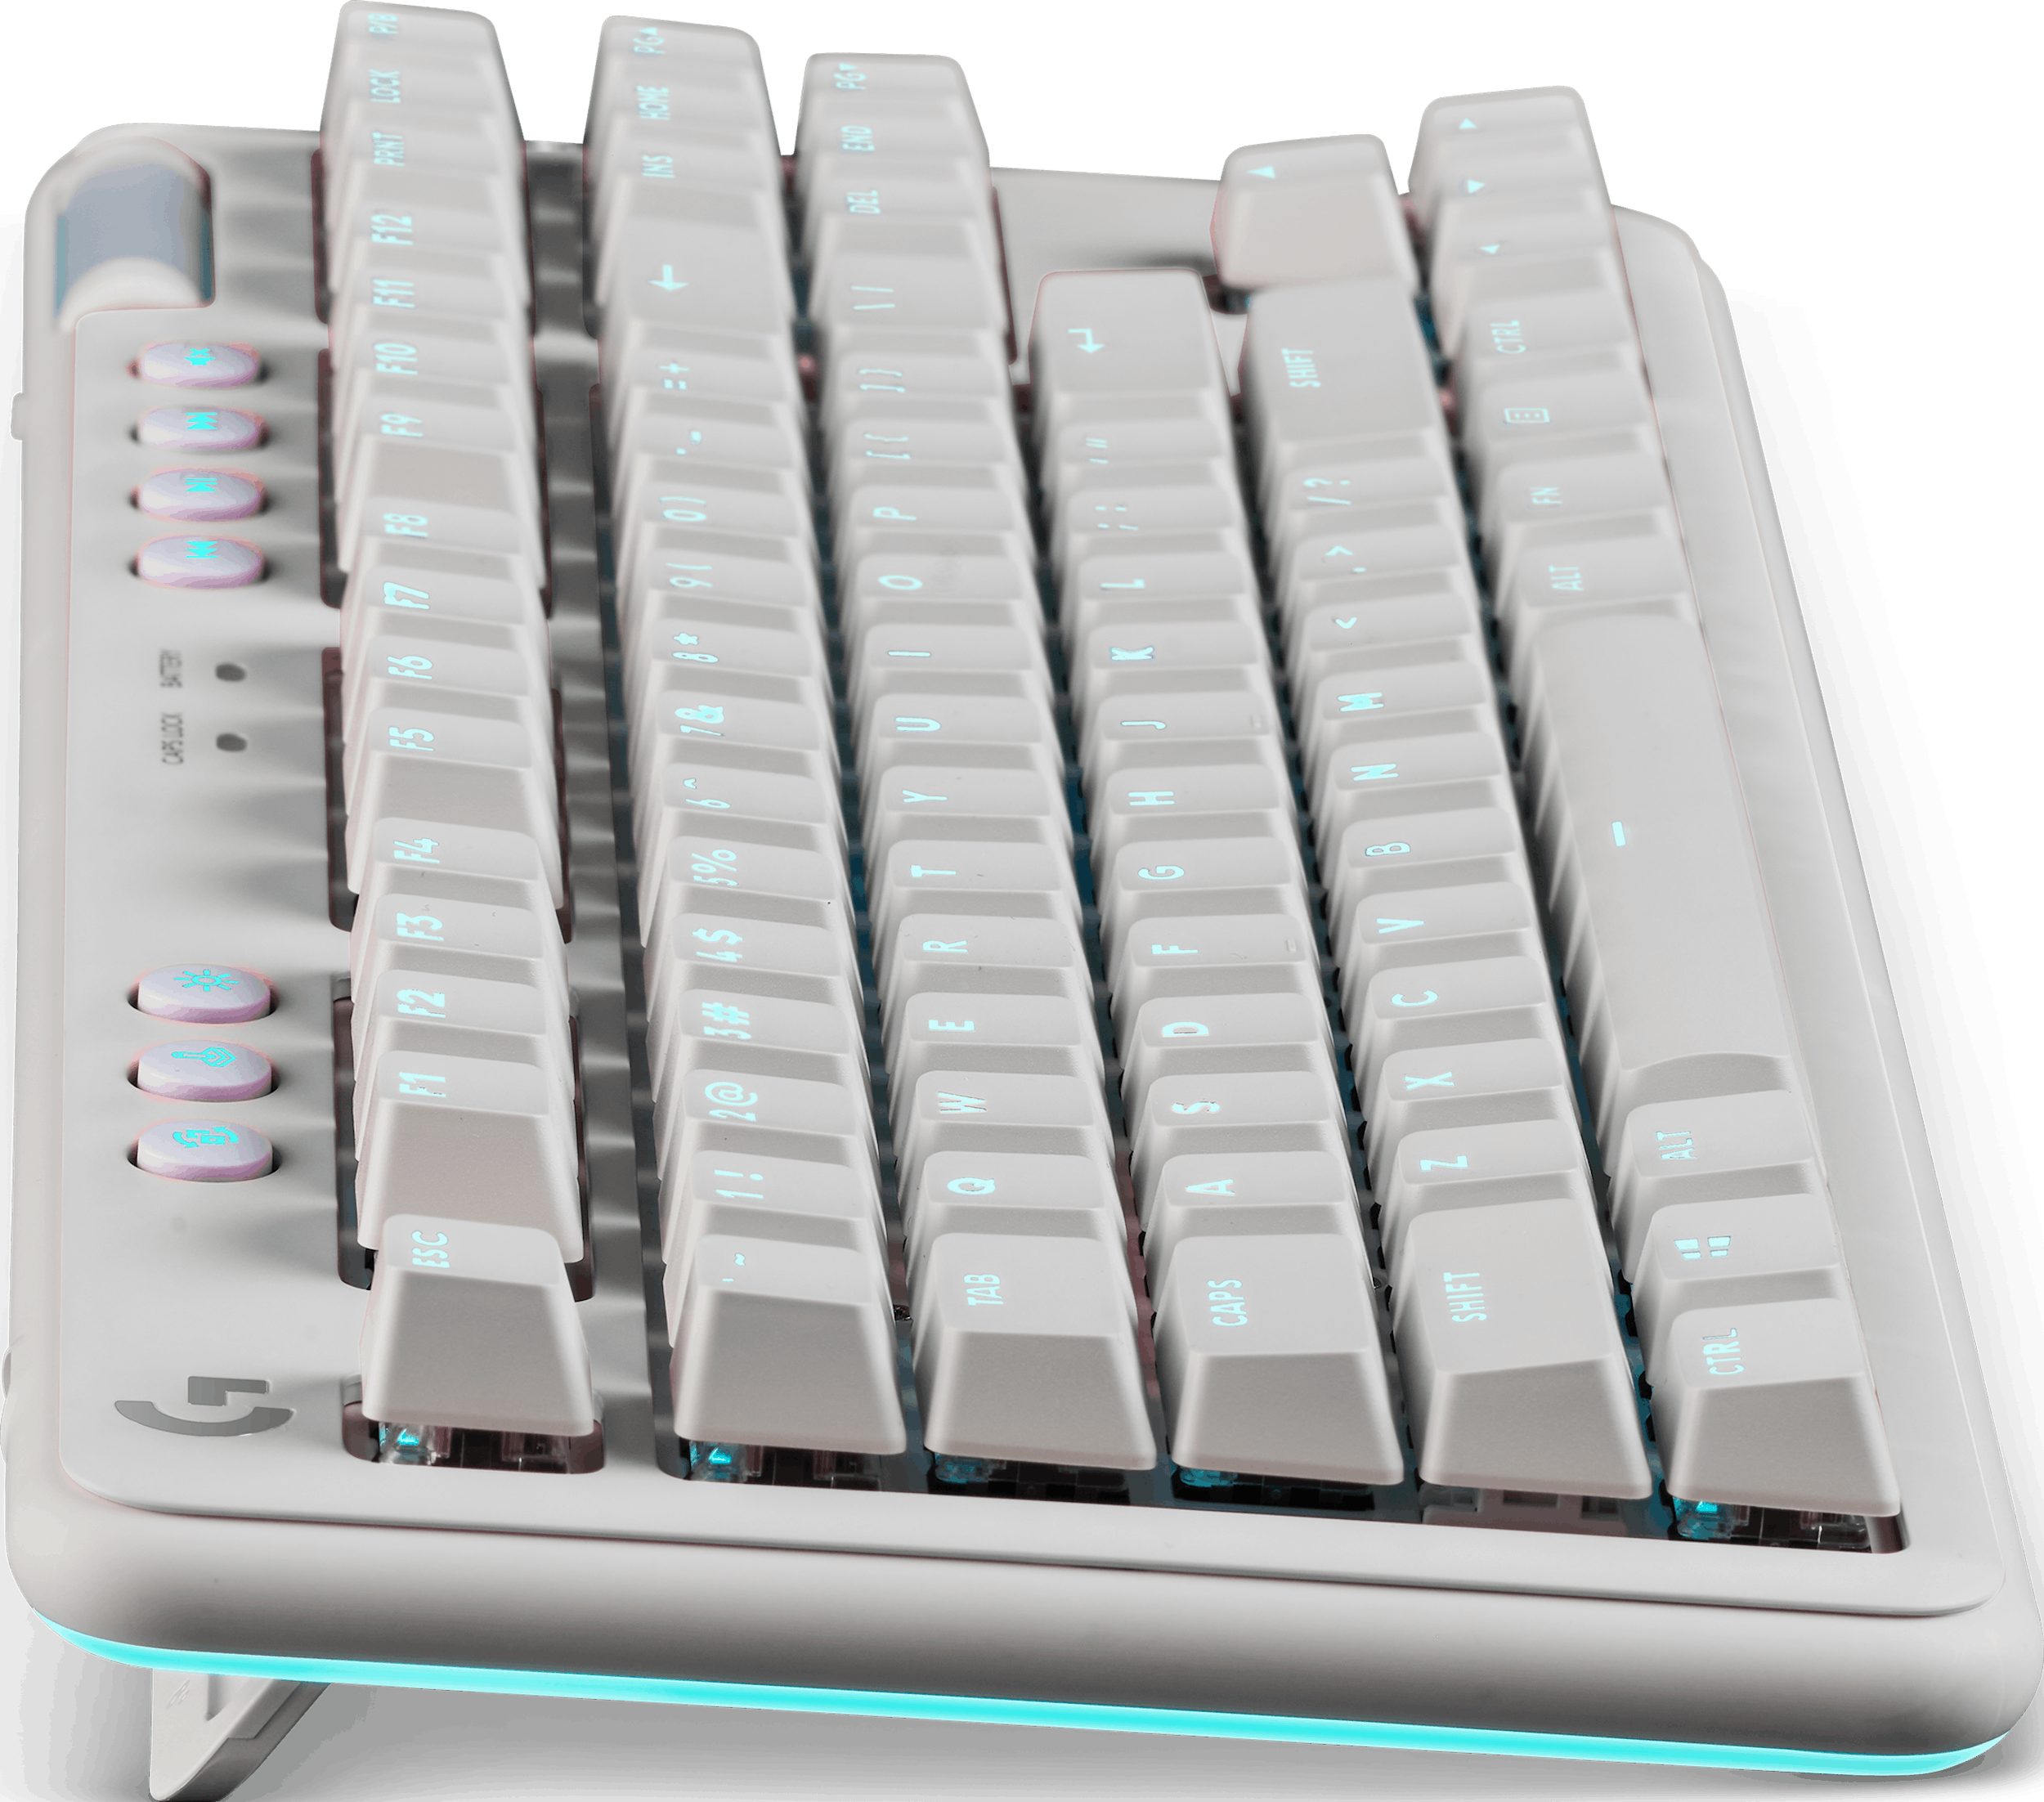 wireless gaming keyboard